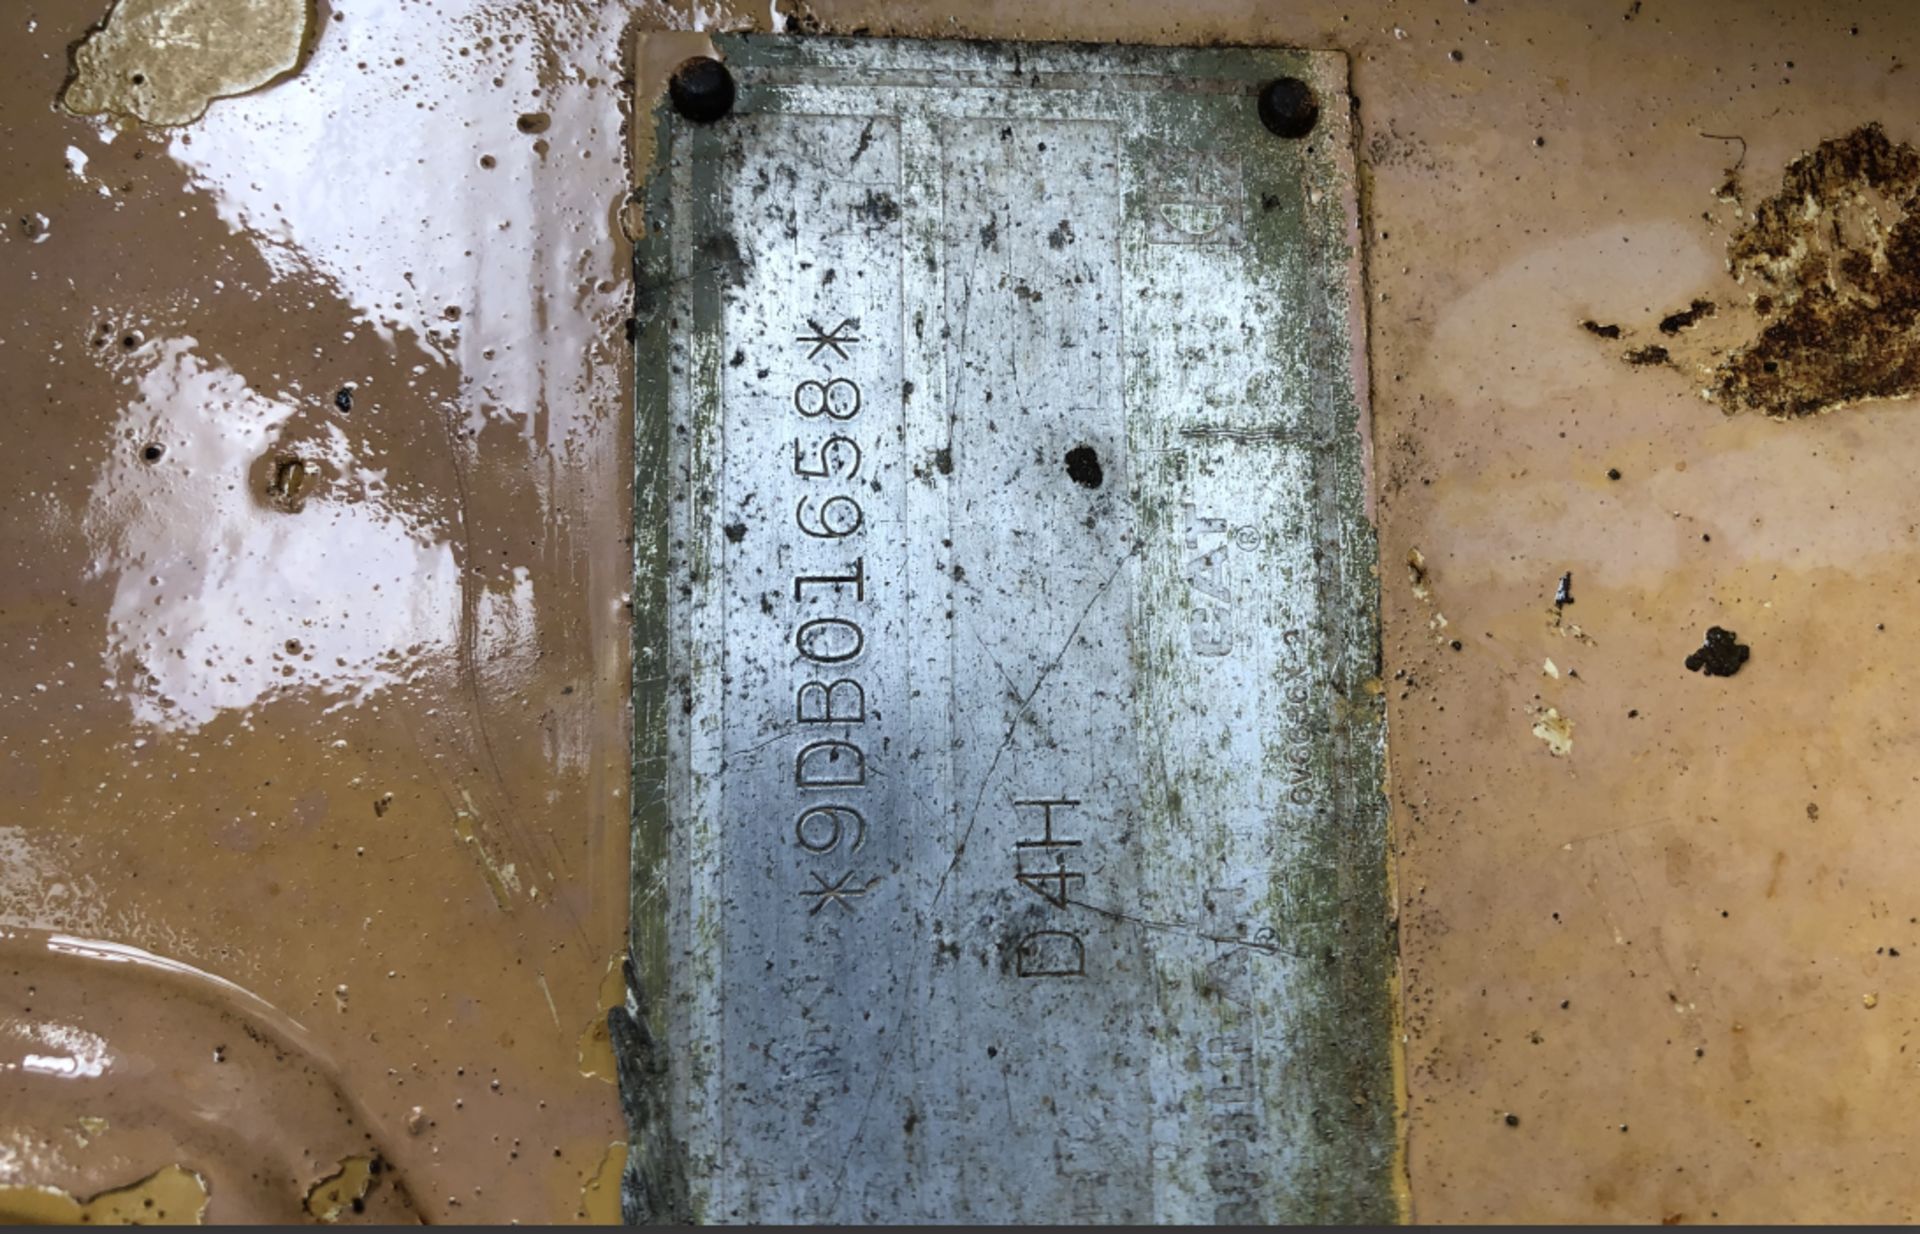 CATERPILLAR D4H LGP TRACKED DOZER | RECON ENGINE - Image 11 of 12